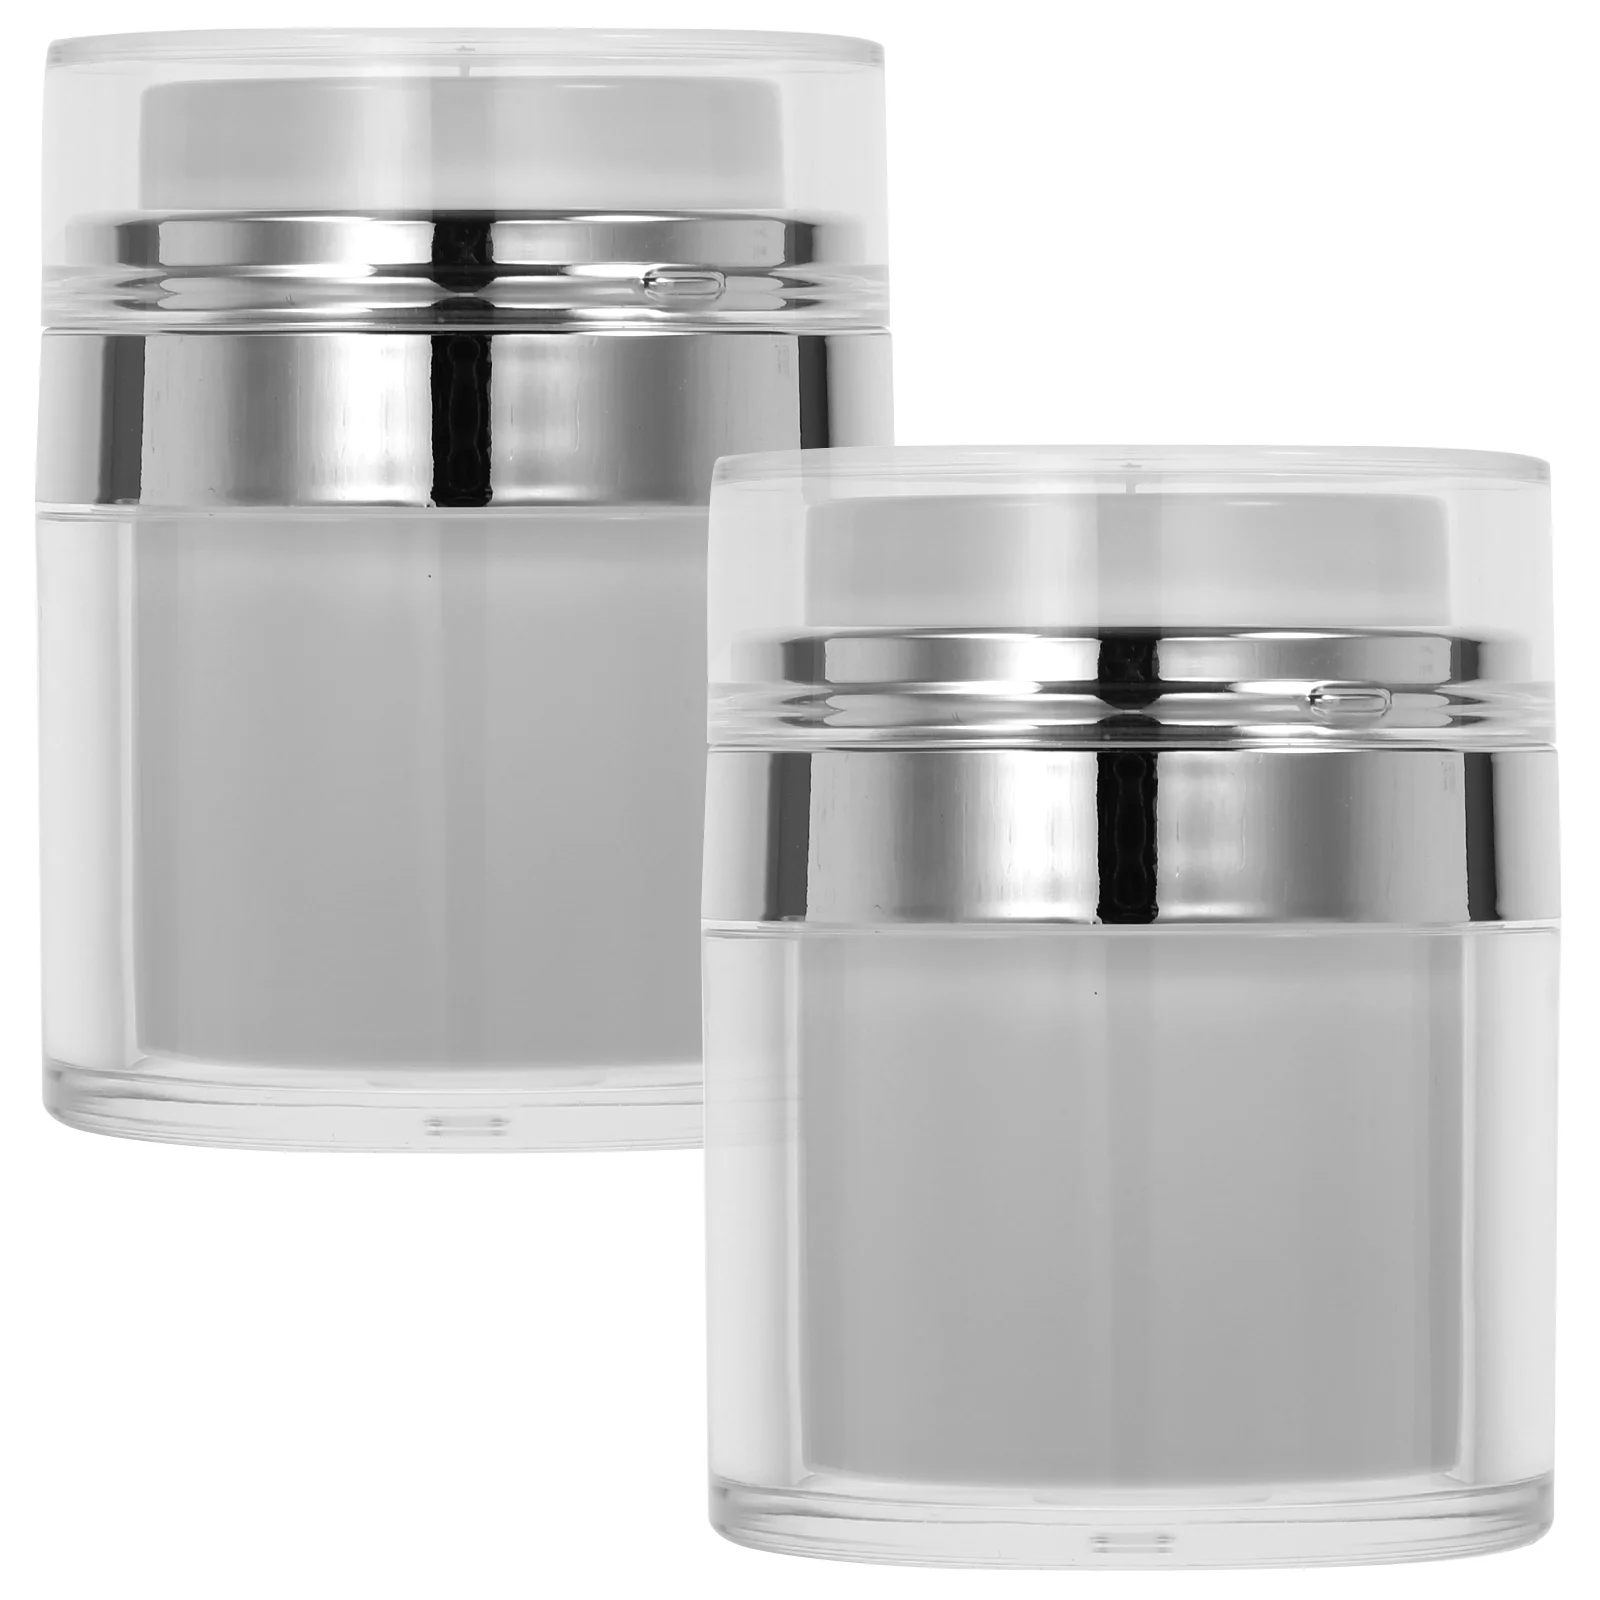 2 Pcs Press Cream Jar Travel Lotion Container Shampoo Bottles Pump Face Wash Portable Sub Empty Cosmetics